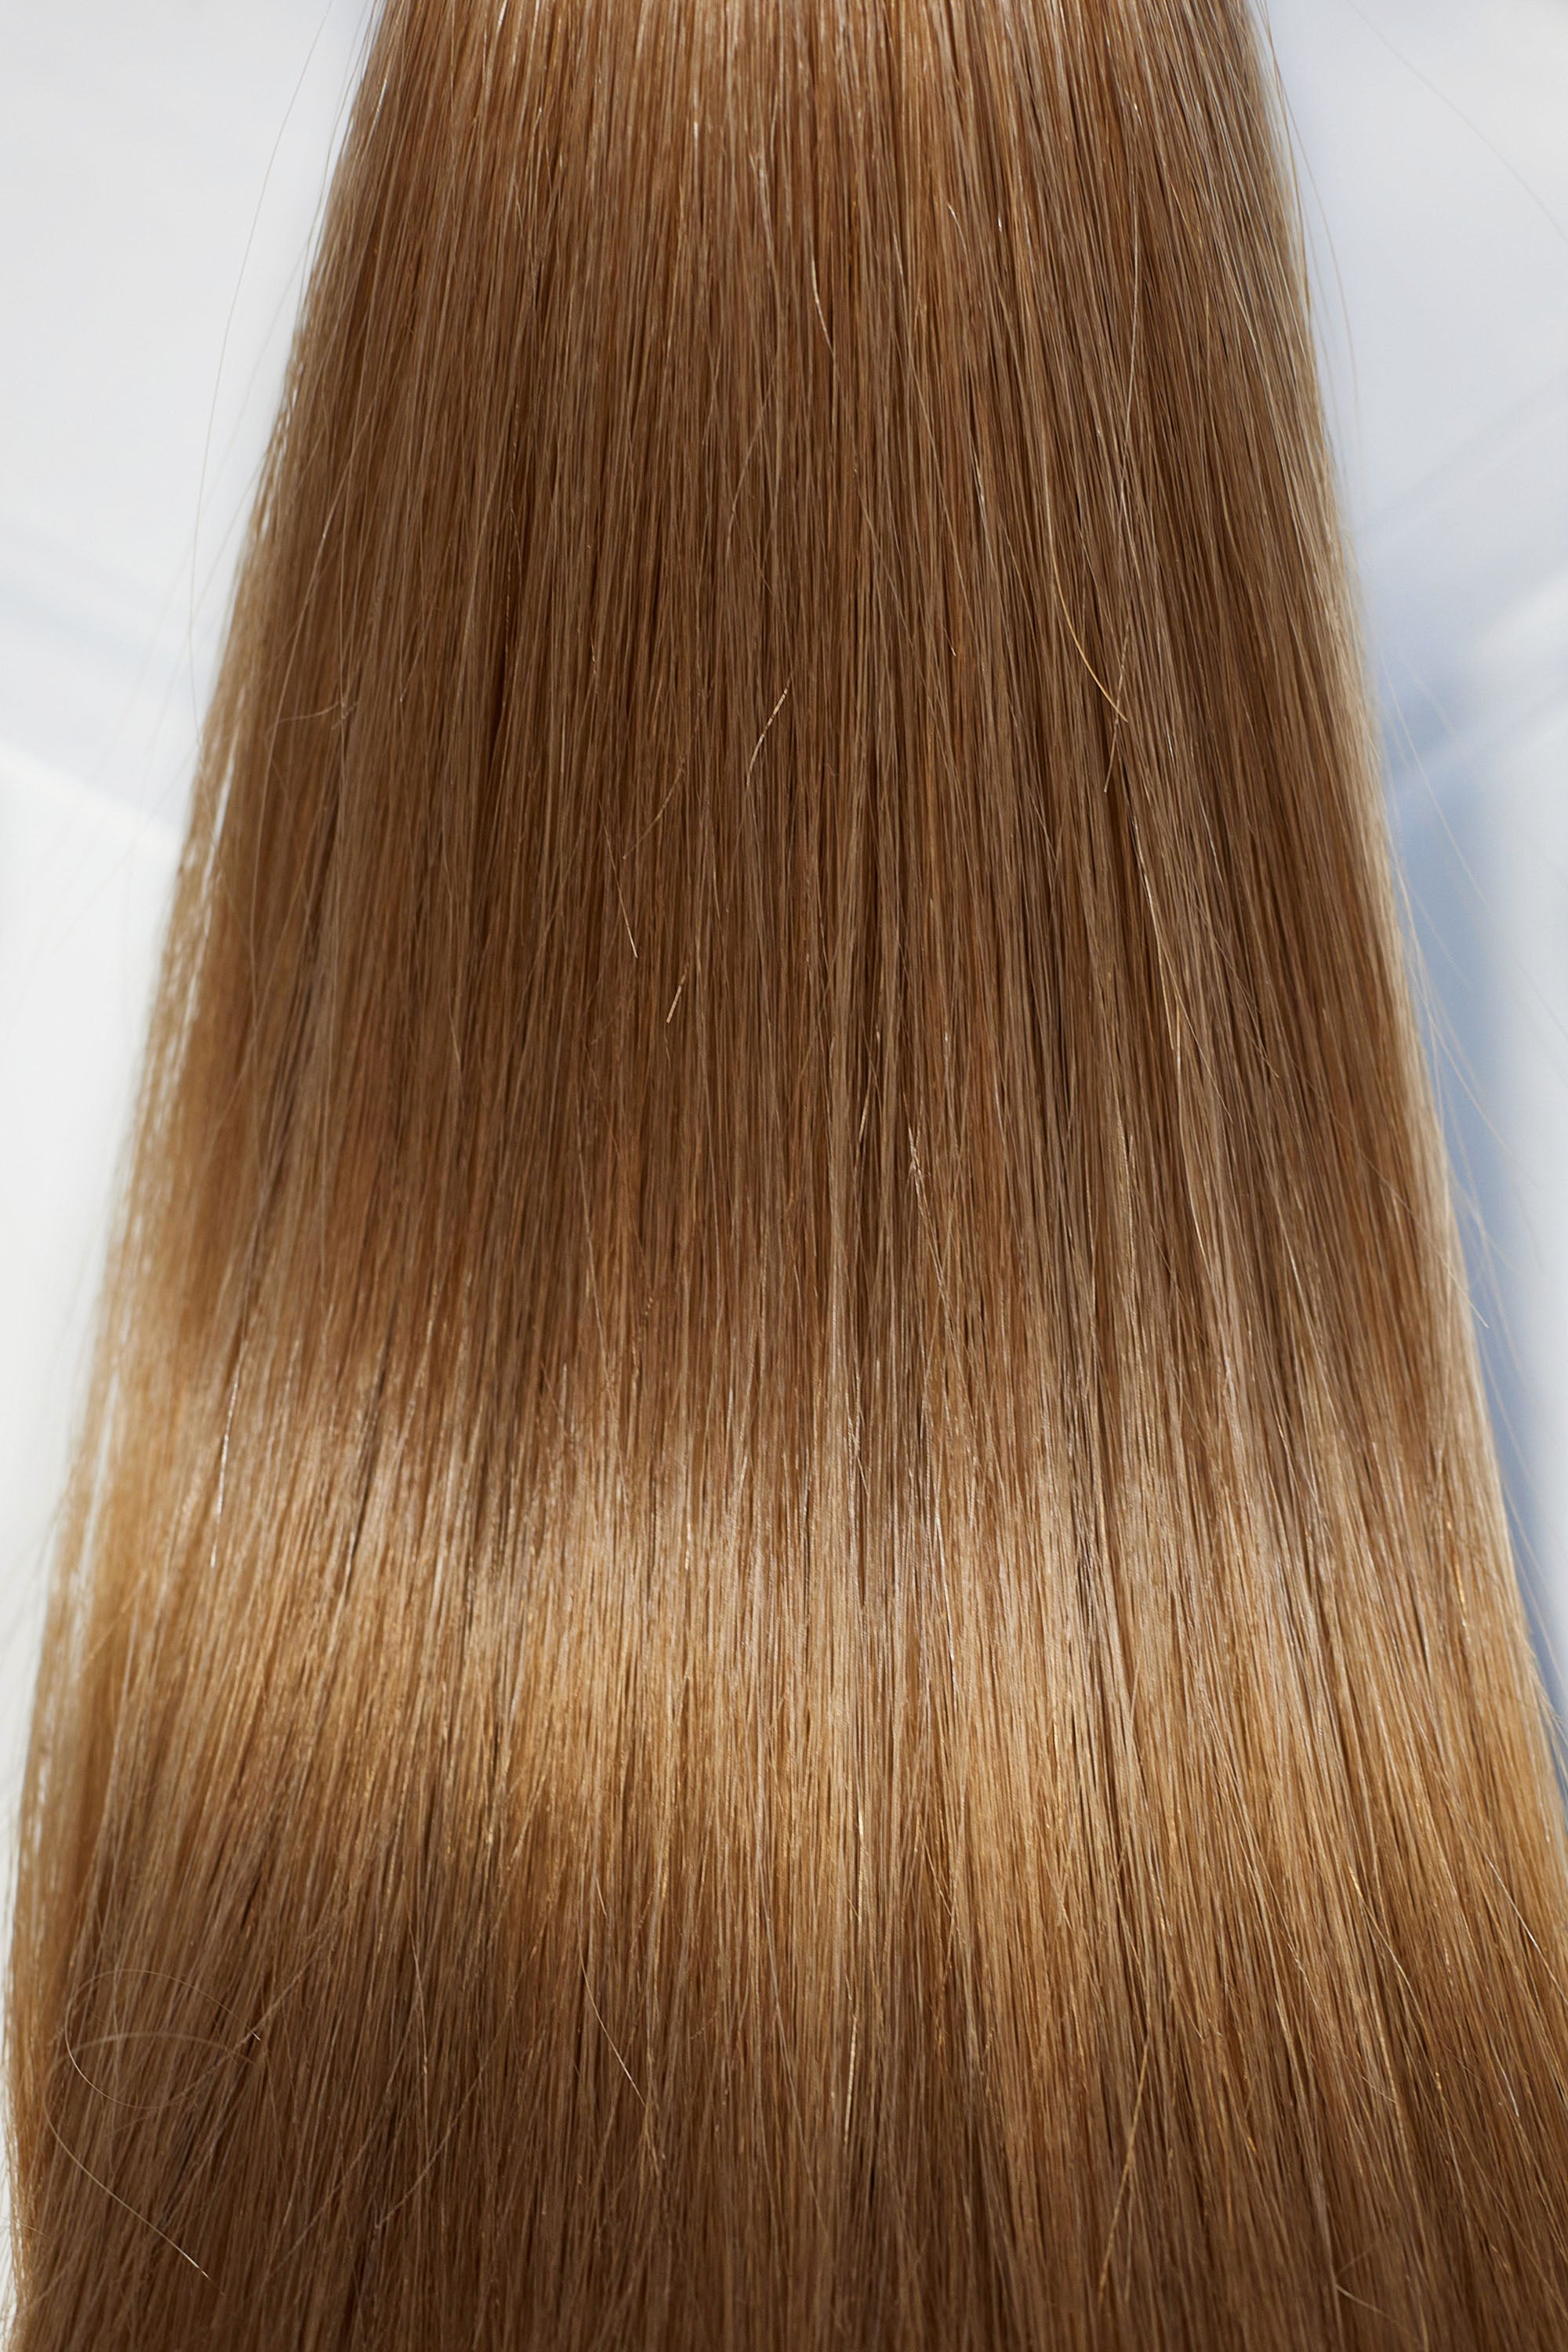 Behair professional Keratin Tip "Premium" 22" (55cm) Natural Straight Caramel Brown #8 - 25g (Standart - 0.7g each pcs) hair extensions